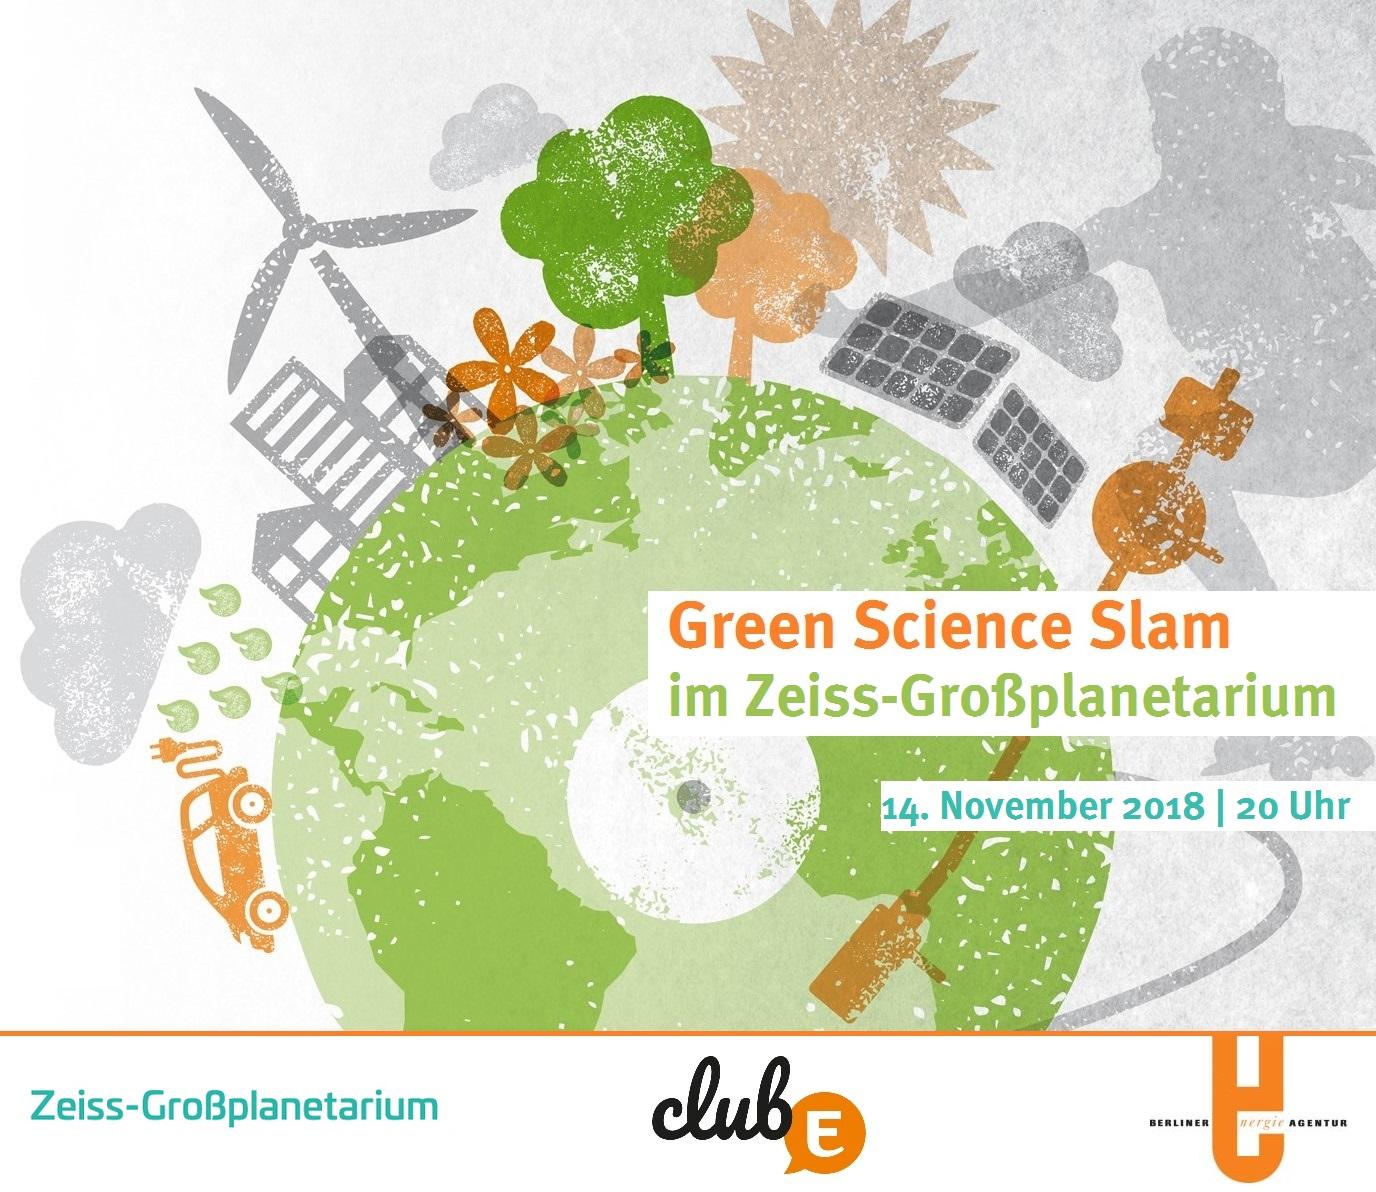 ClubE-Event: Green Science Slam im Zeiss-Großplanetarium